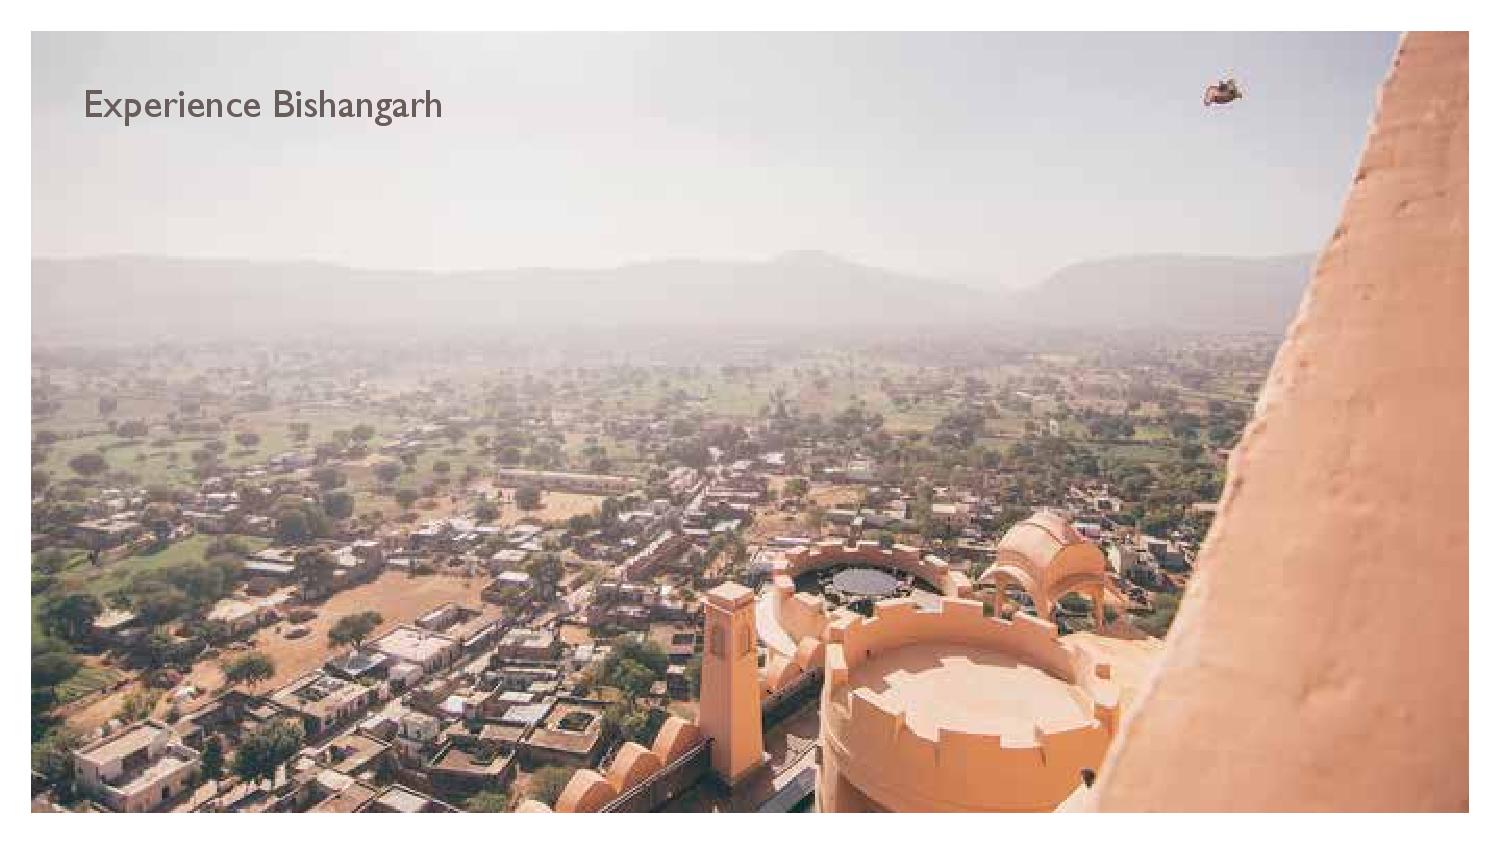 alilafortbishangarh experience page 002 - REVIEW - Alila Fort Bishangarh (Jaipur, India)